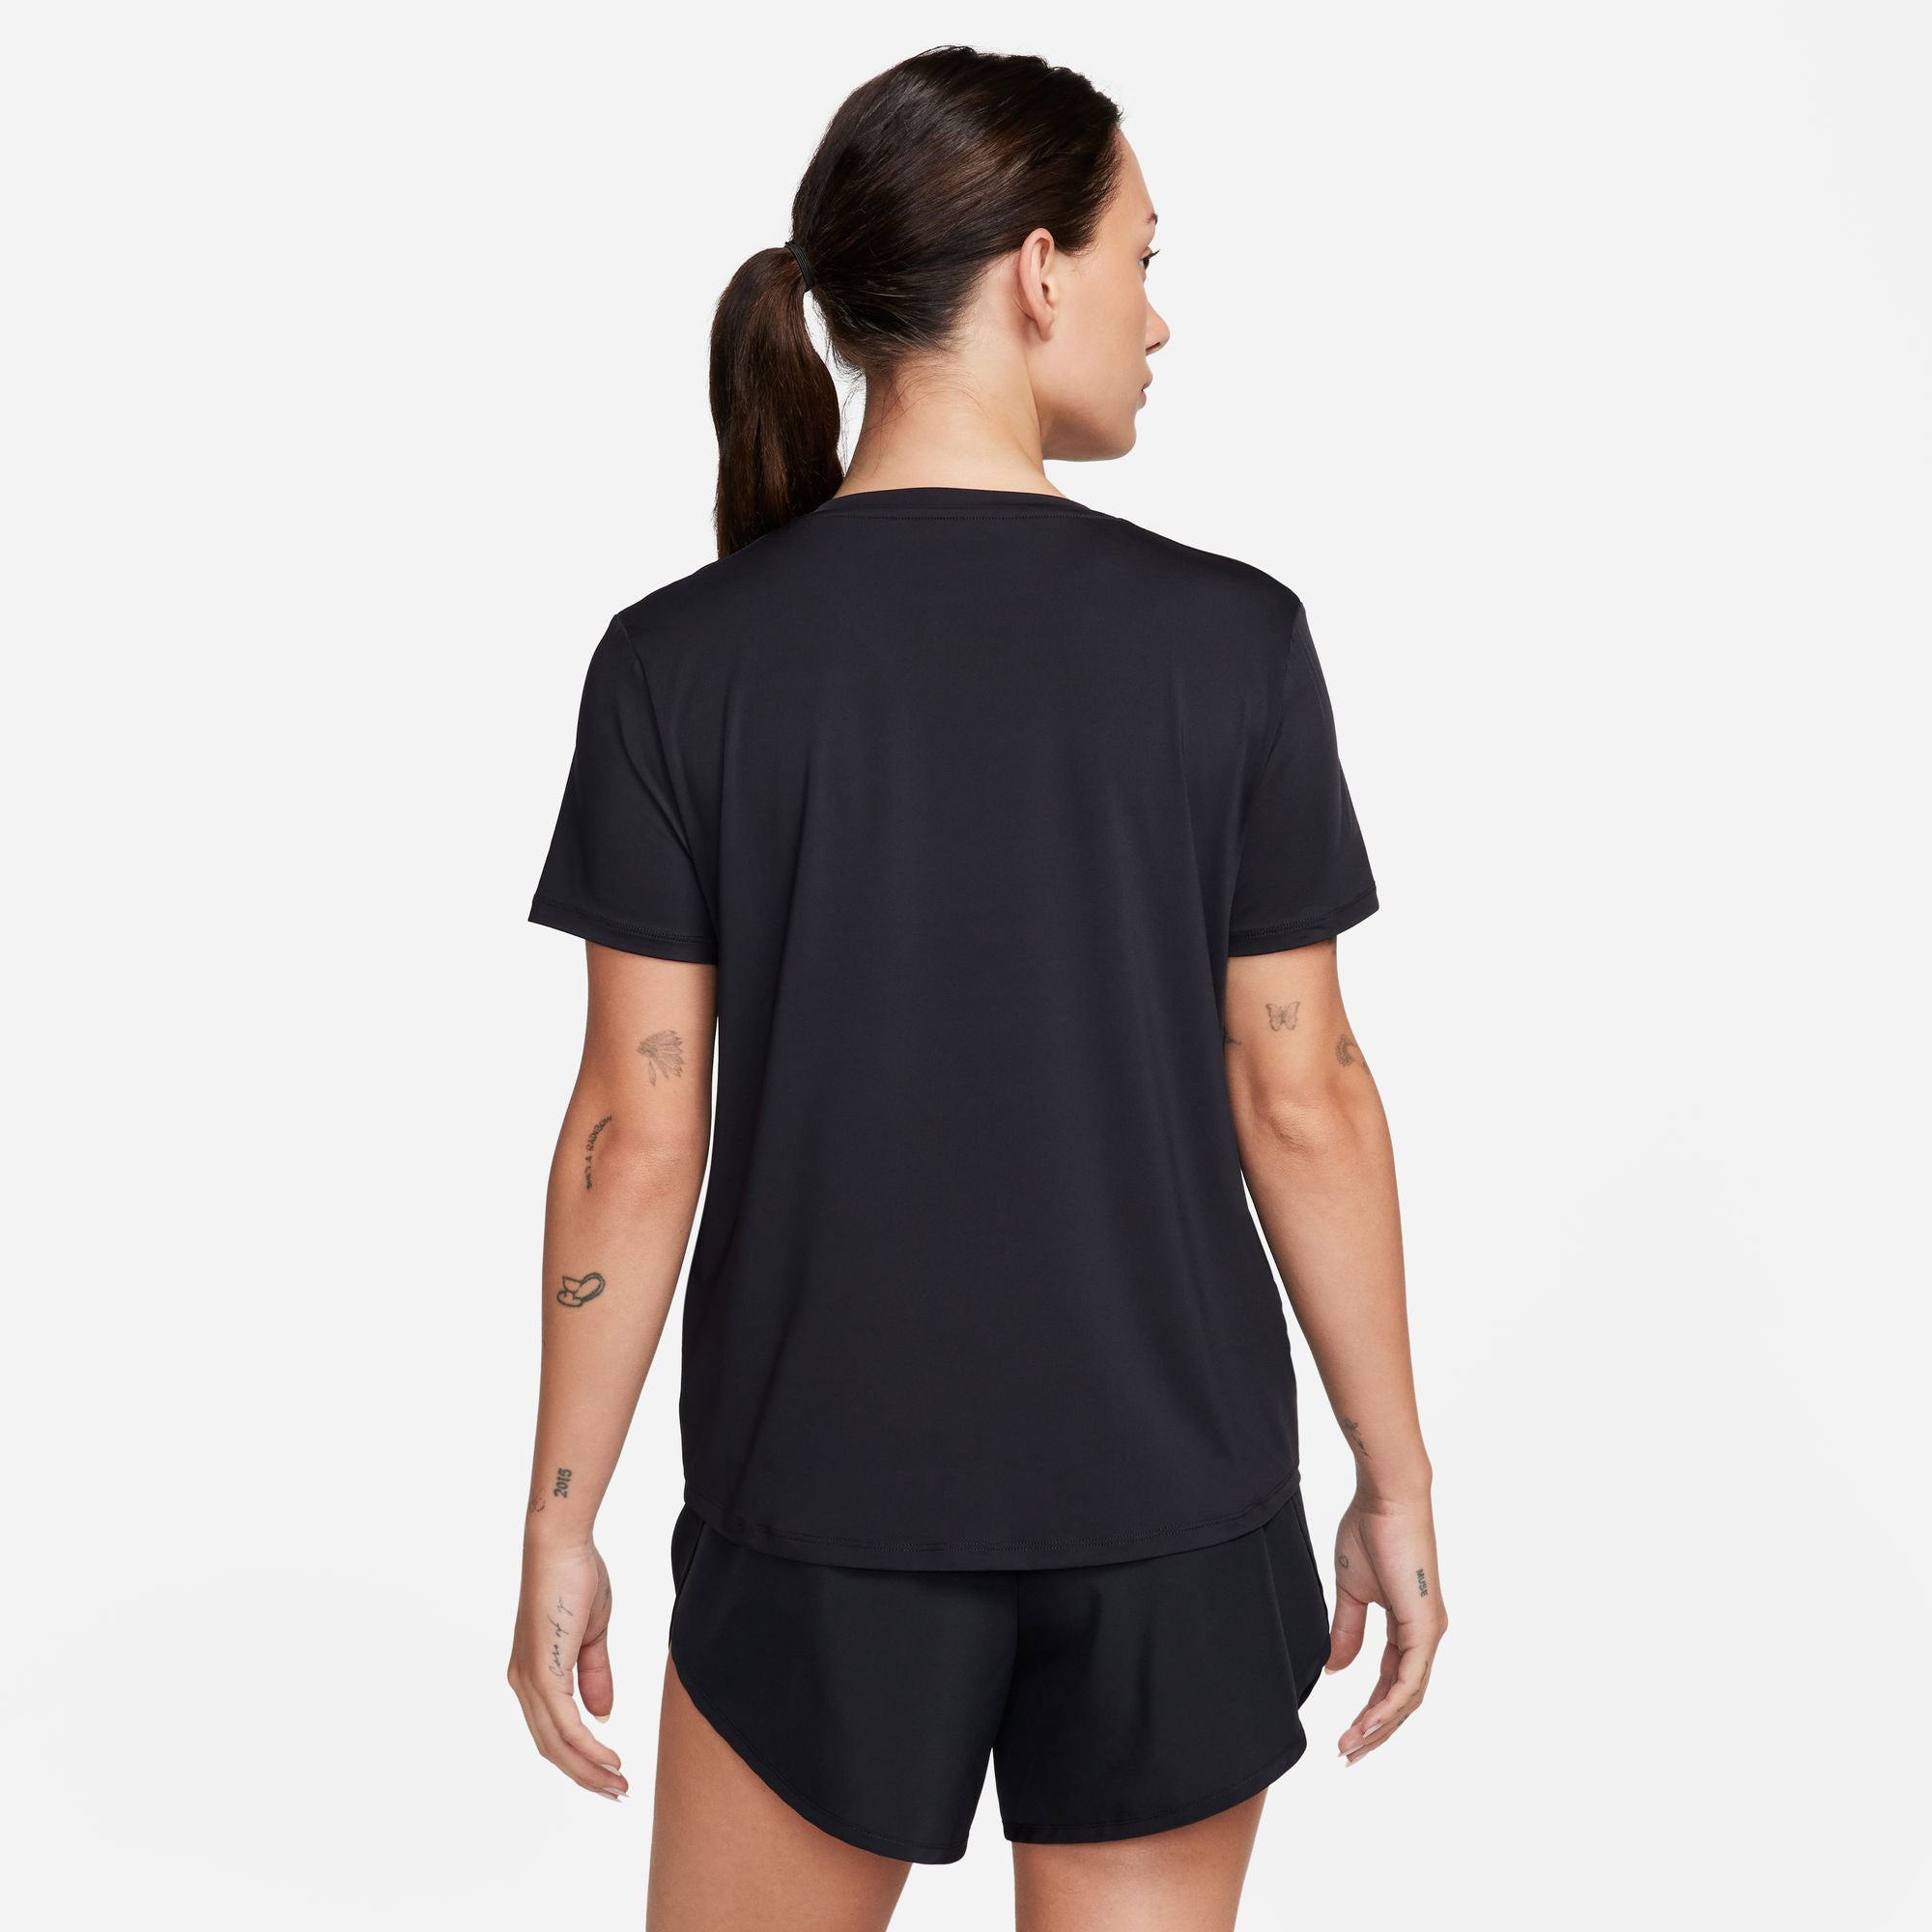 Nike One Classic Women's Dri-FIT Shirt - Black (2)